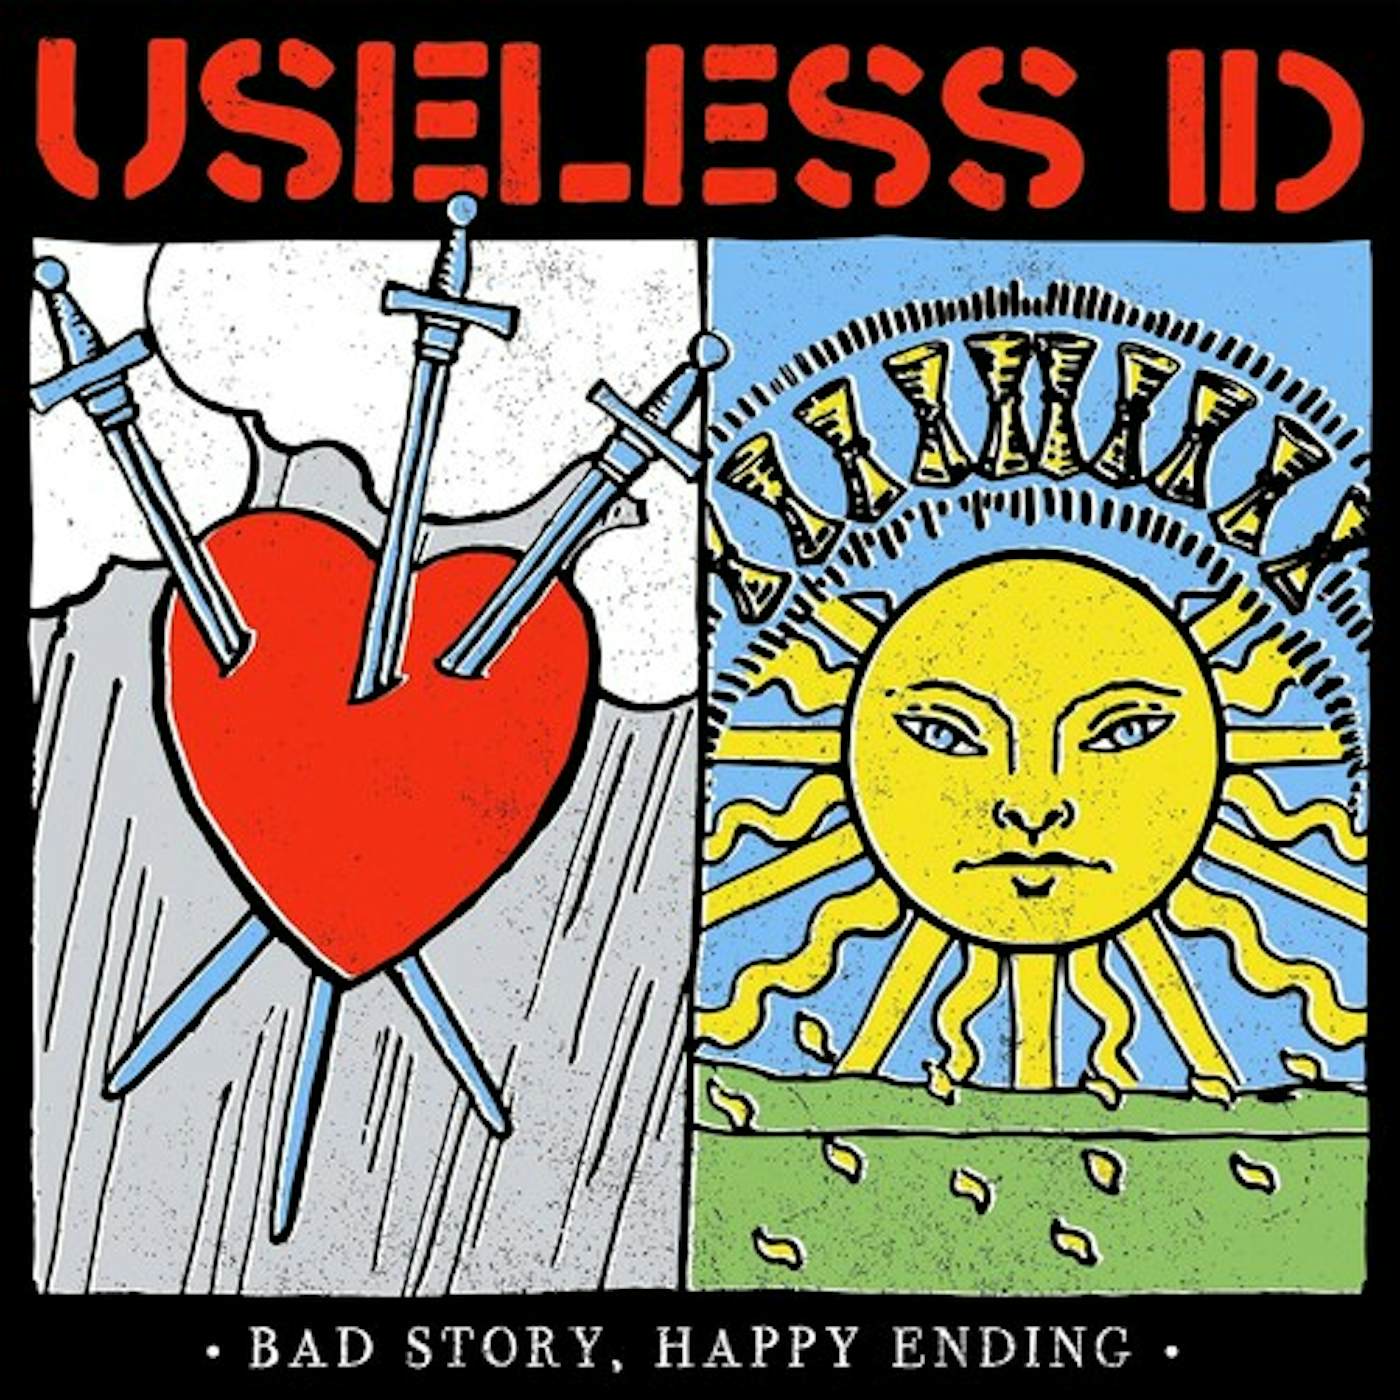 Useless Id BAD STORY HAPPY ENDING Vinyl Record